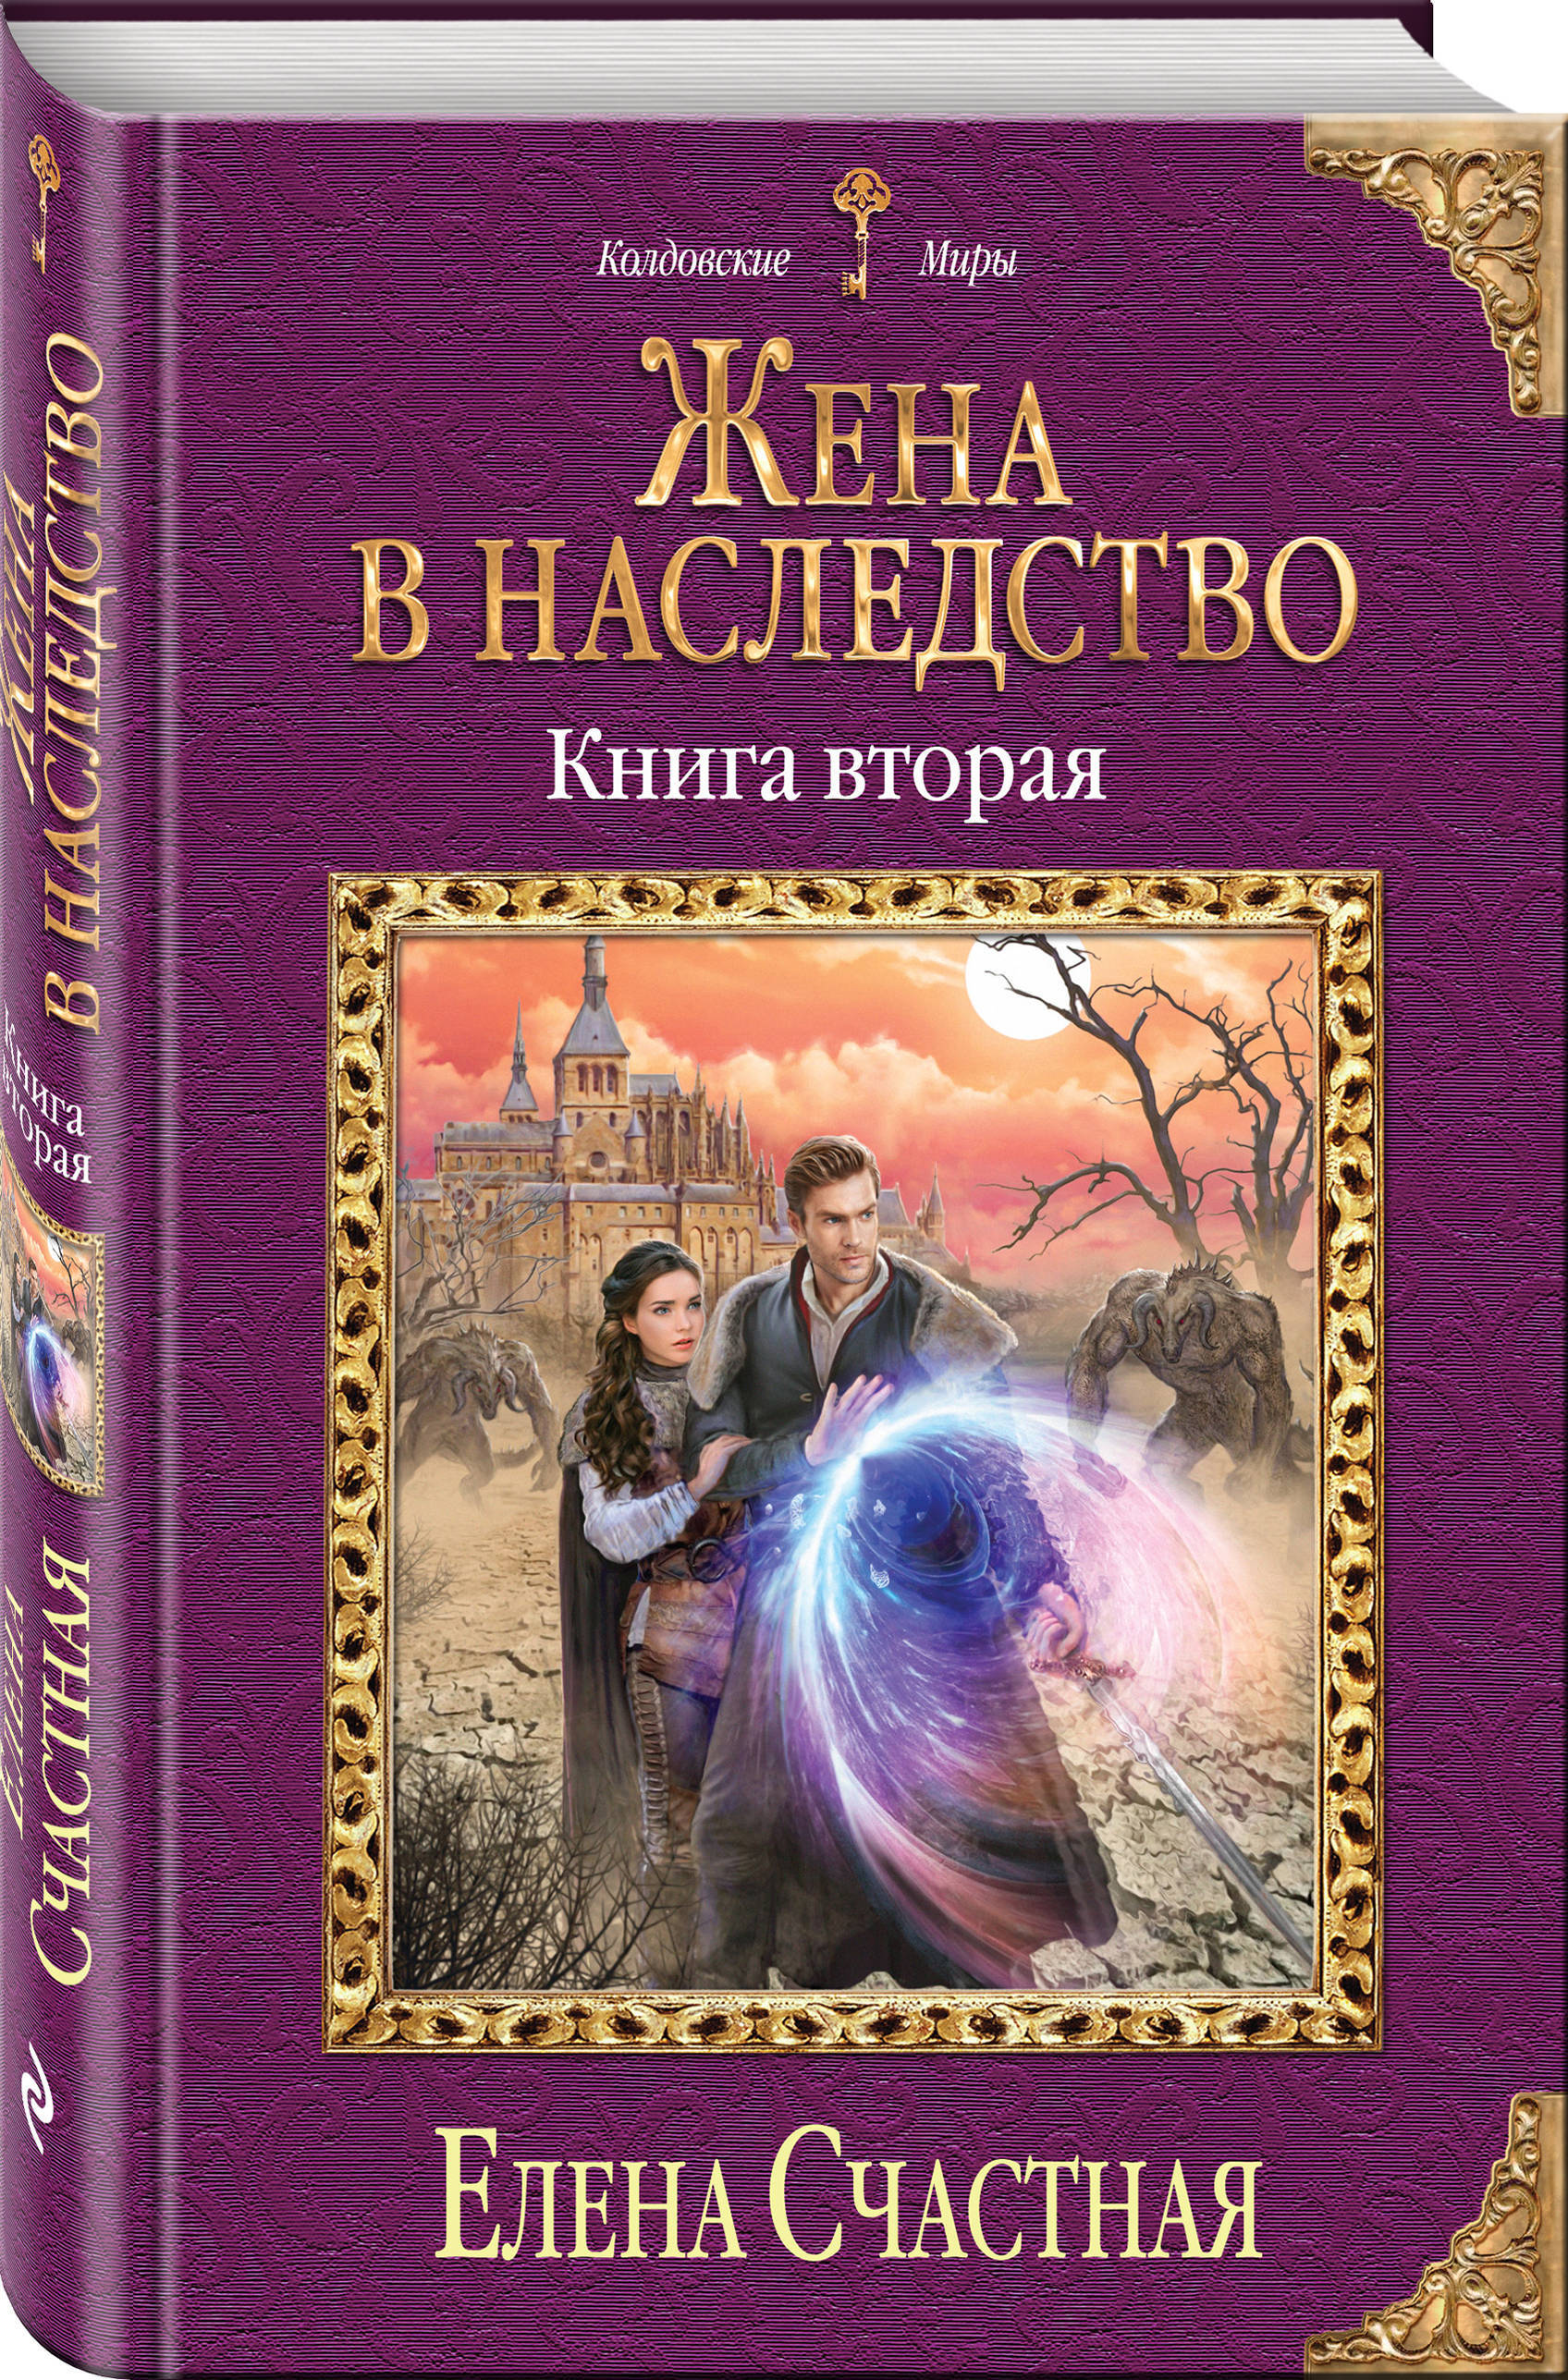 The wife book. Колдовские миры книги. Книга жена.